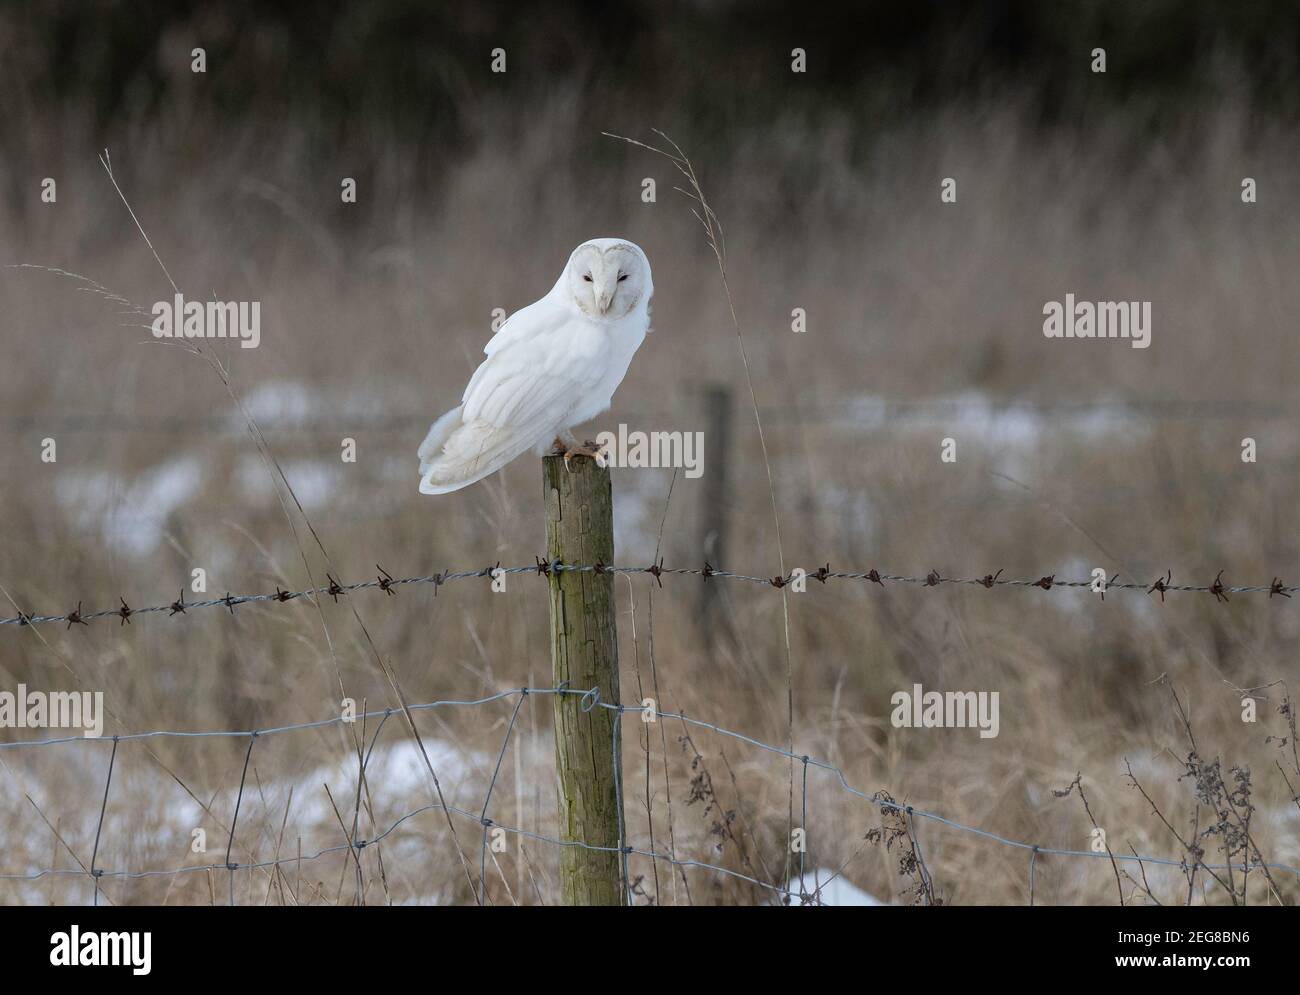 Leucistic barn owl sitting on a post in a snowy landscape Stock Photo